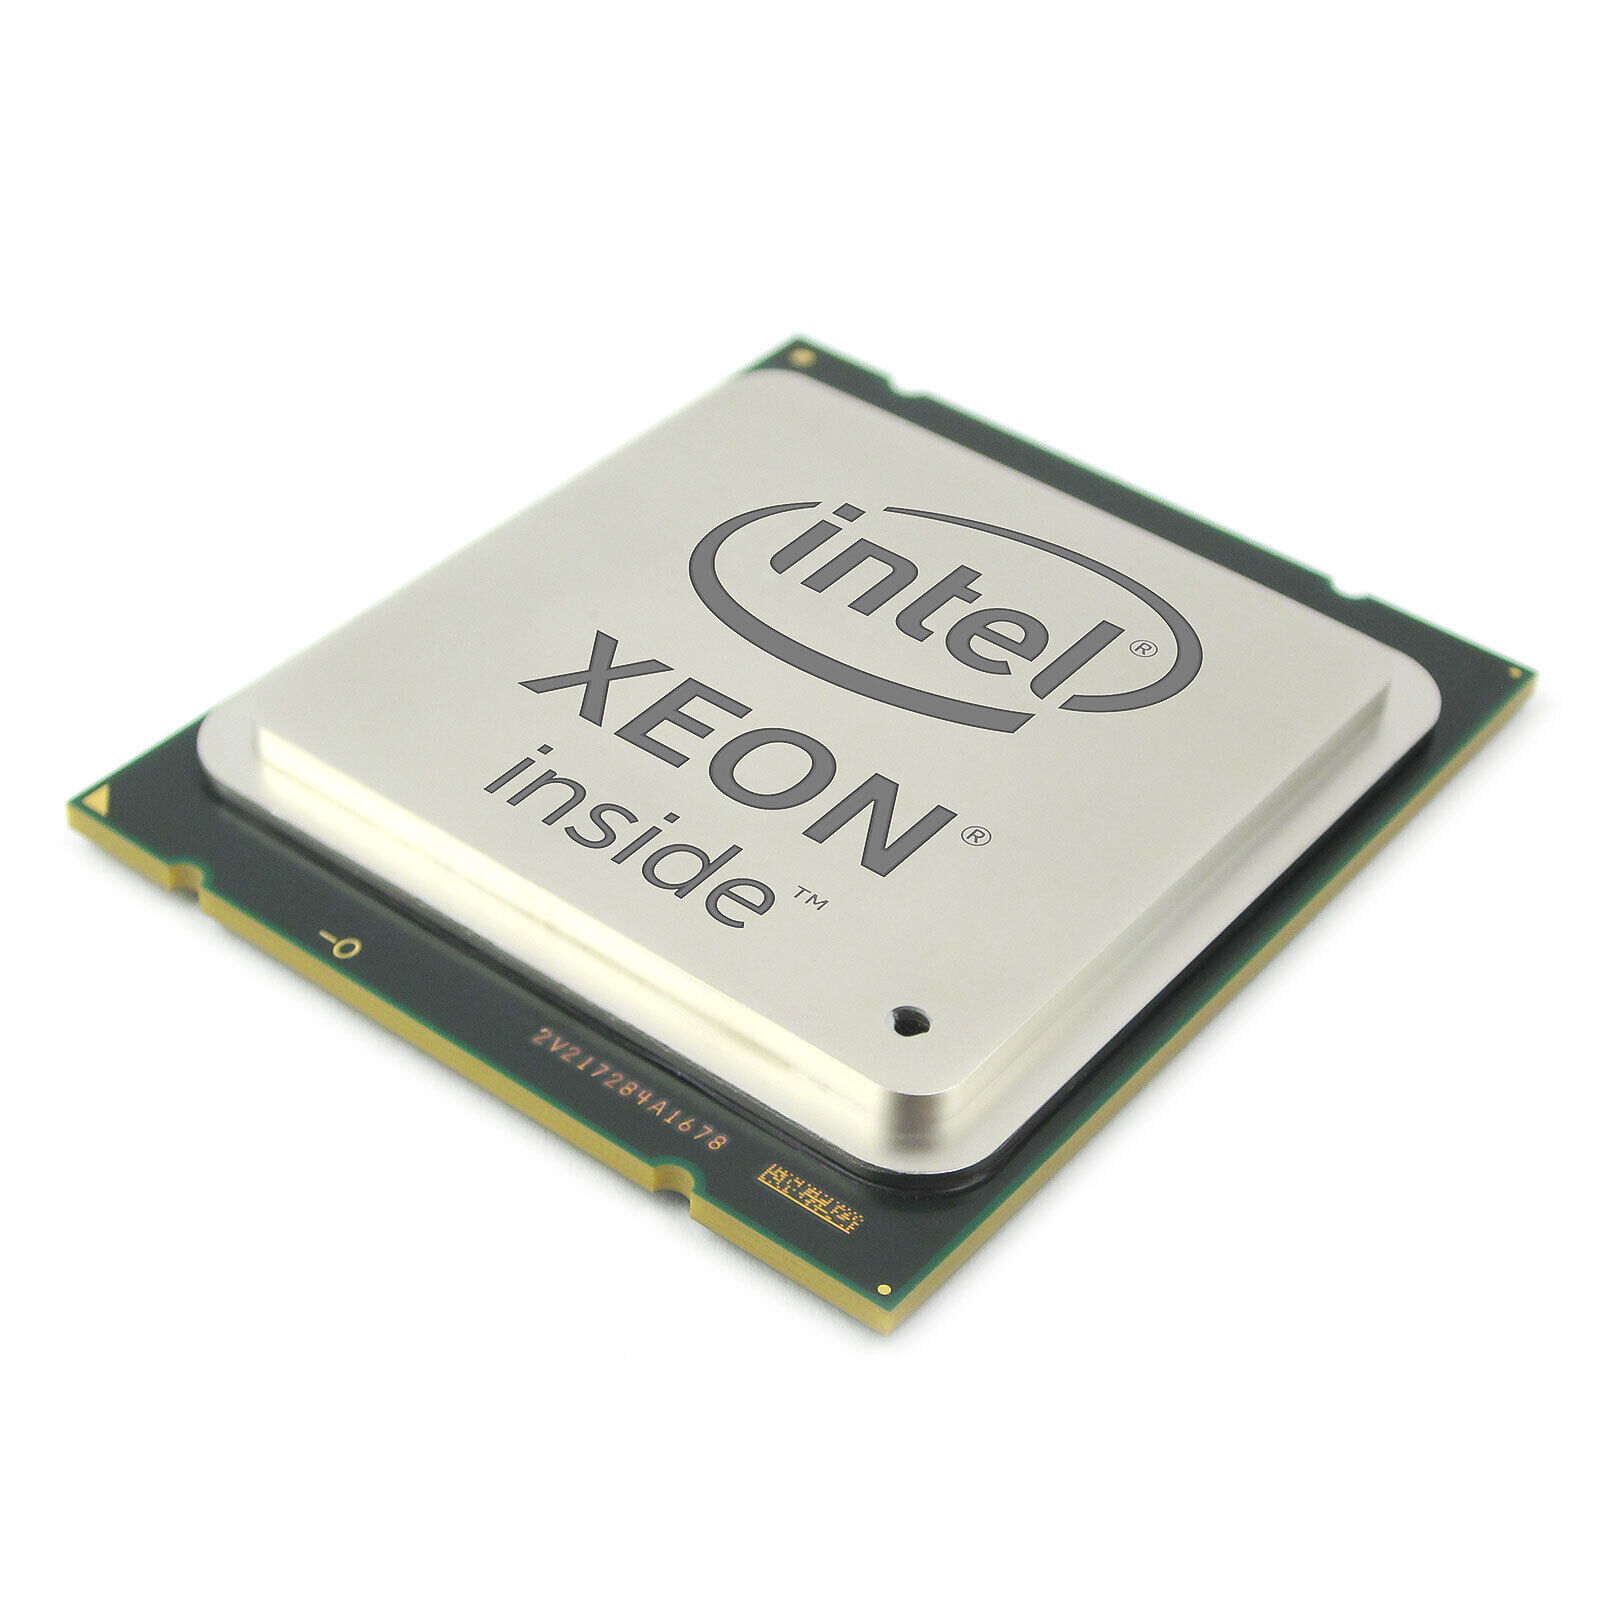 Intel Xeon E5-2630 v2 2.60GHz 6-Core LGA 2011 / Socket R Processor SR1AM